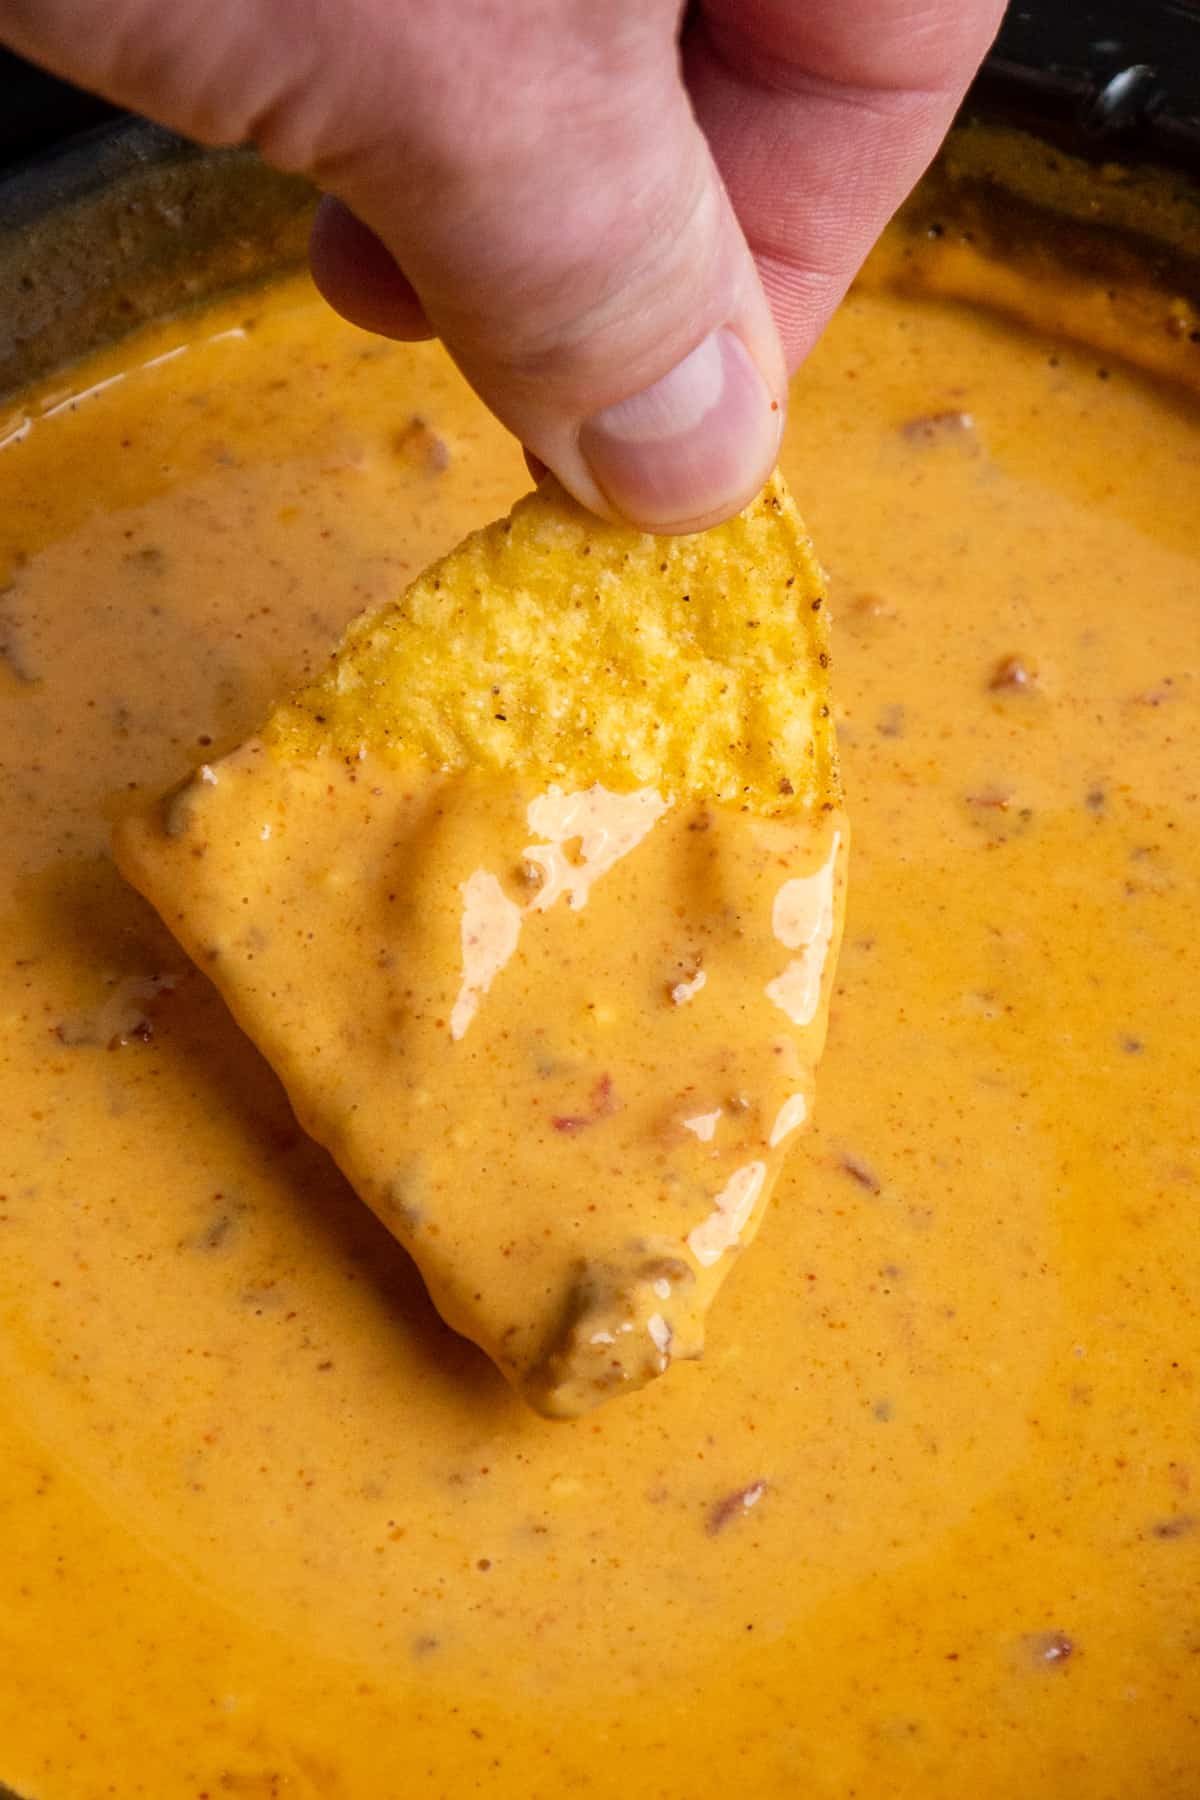 A hand dipping a tortilla chip into Crock Pot chili cheese dip.